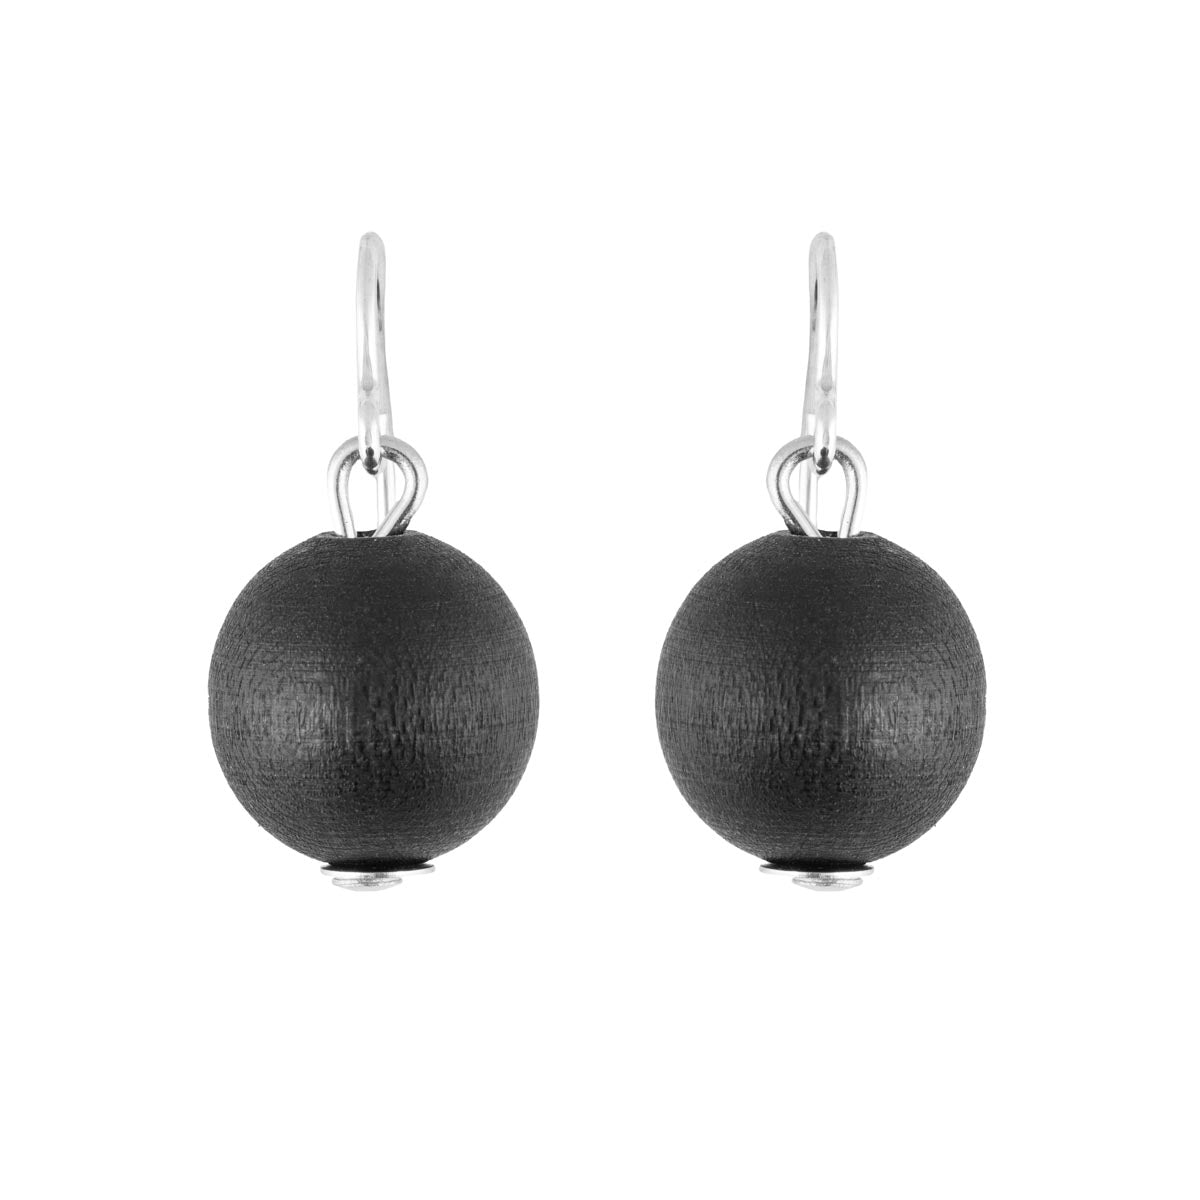 Karpalo earrings, black